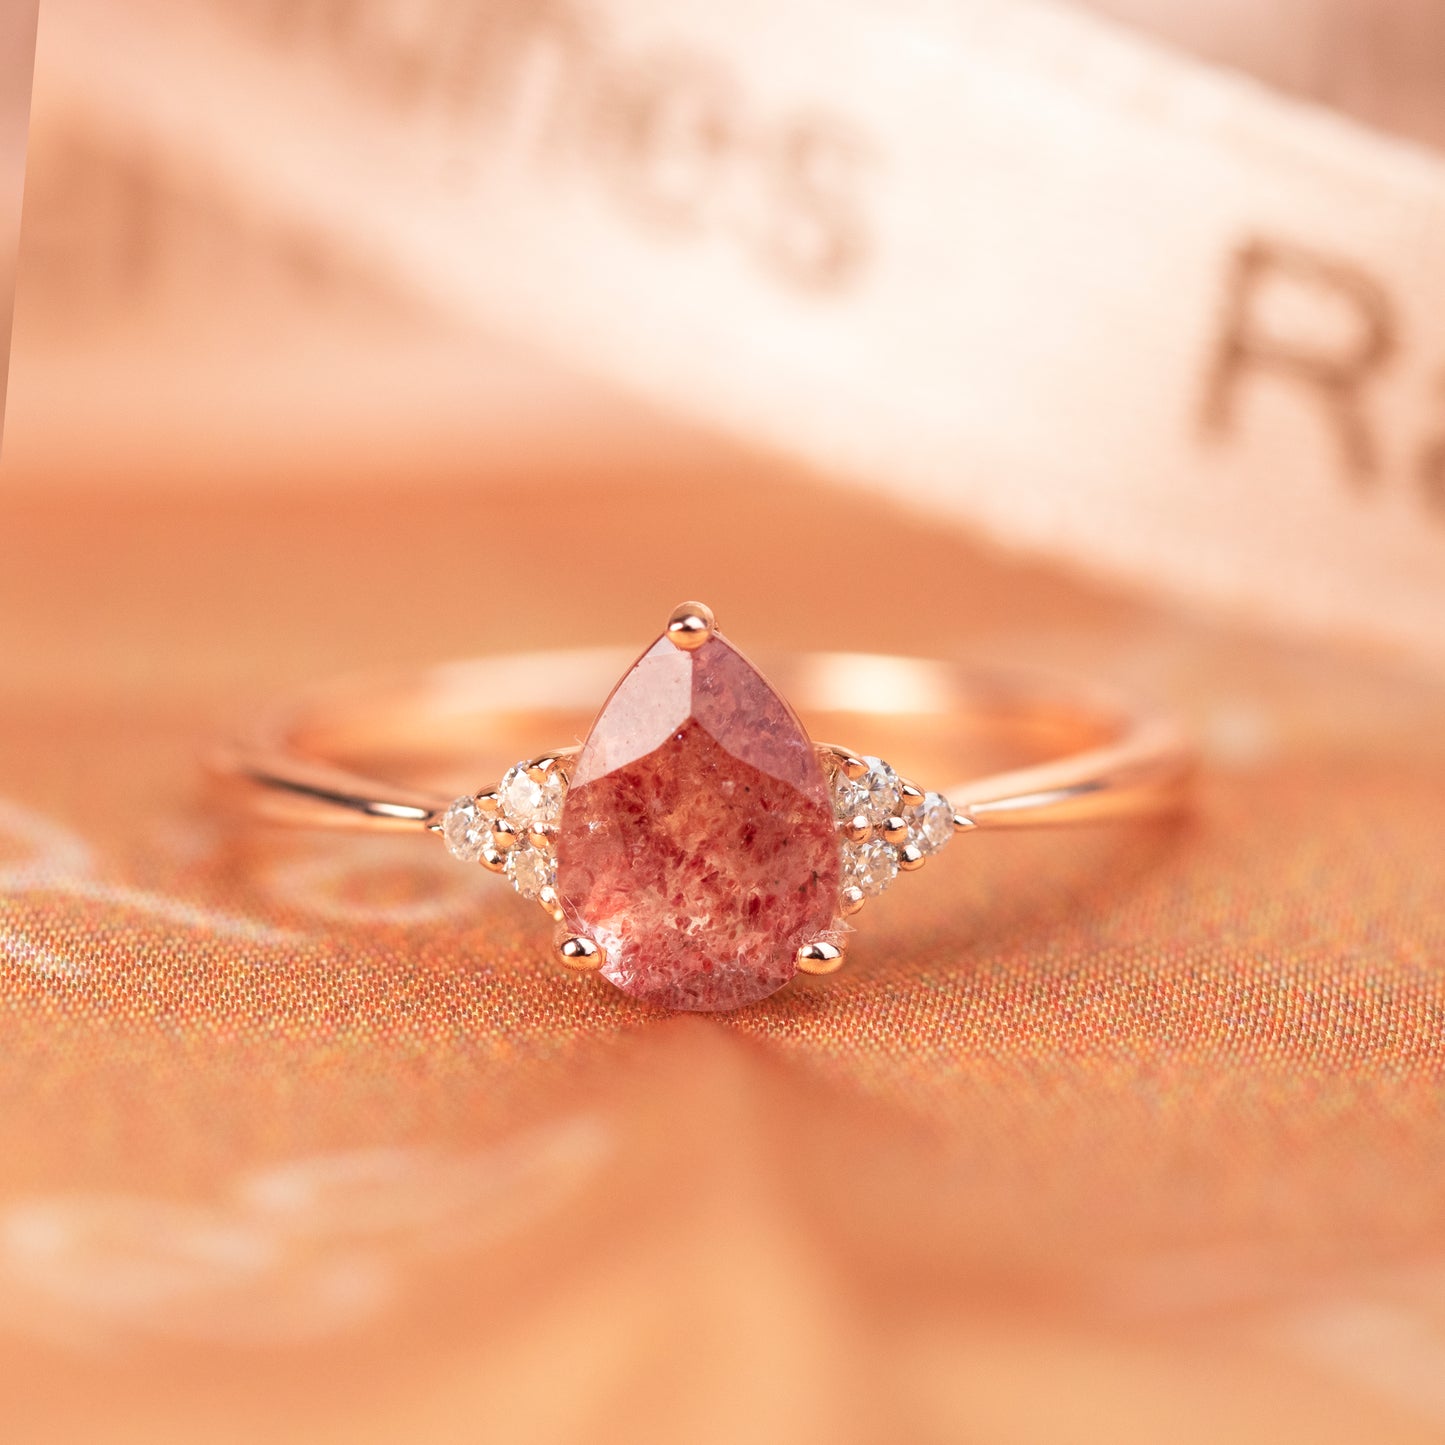 7 Stone 1.05 carat Tear Drop Cut Strawberry Quartz and Diamond Accent Plain Shank Wedding Ring in Rose Gold